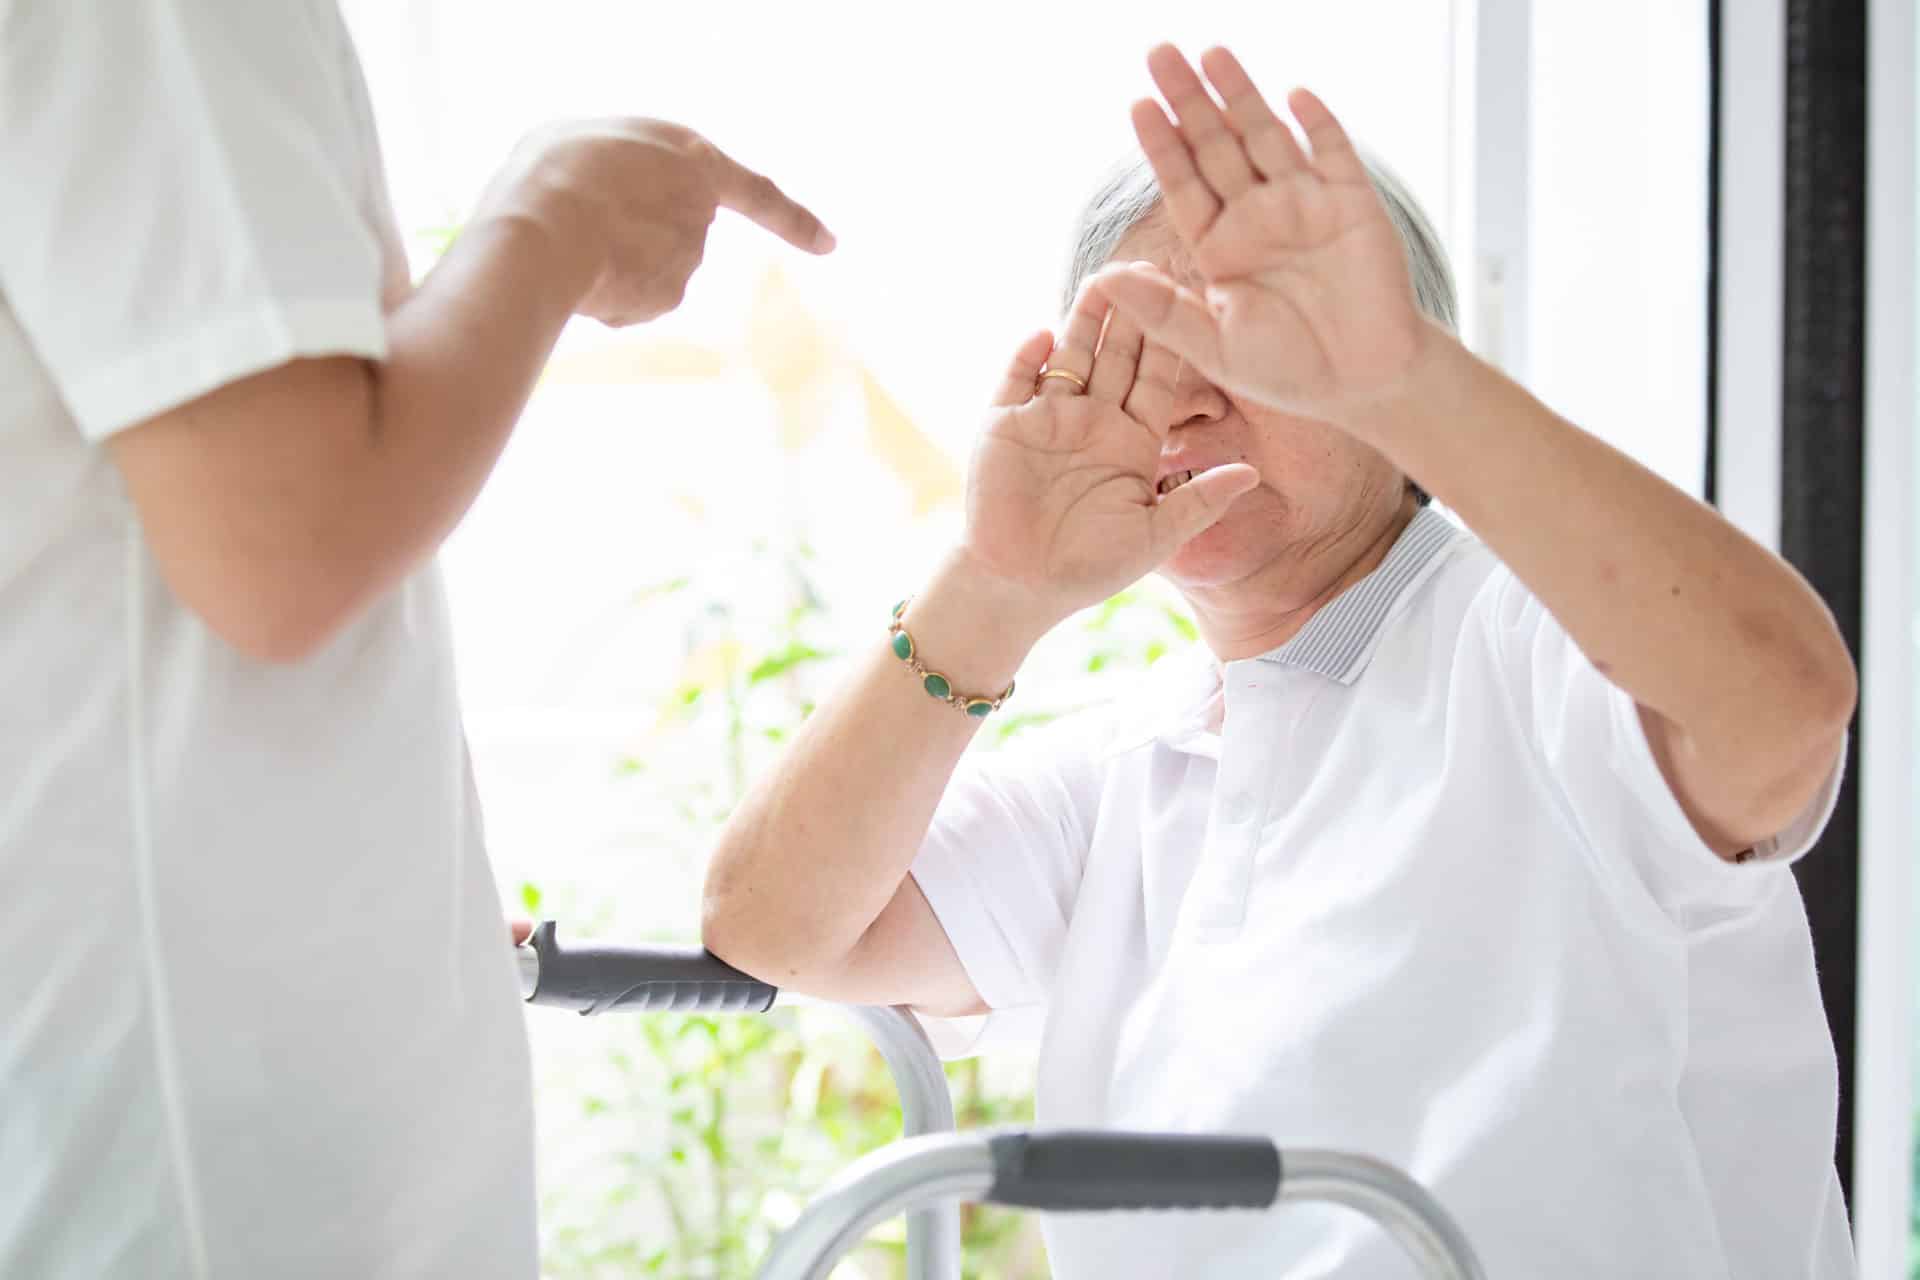 Warning Signs of Abuse in NY Nursing Homes